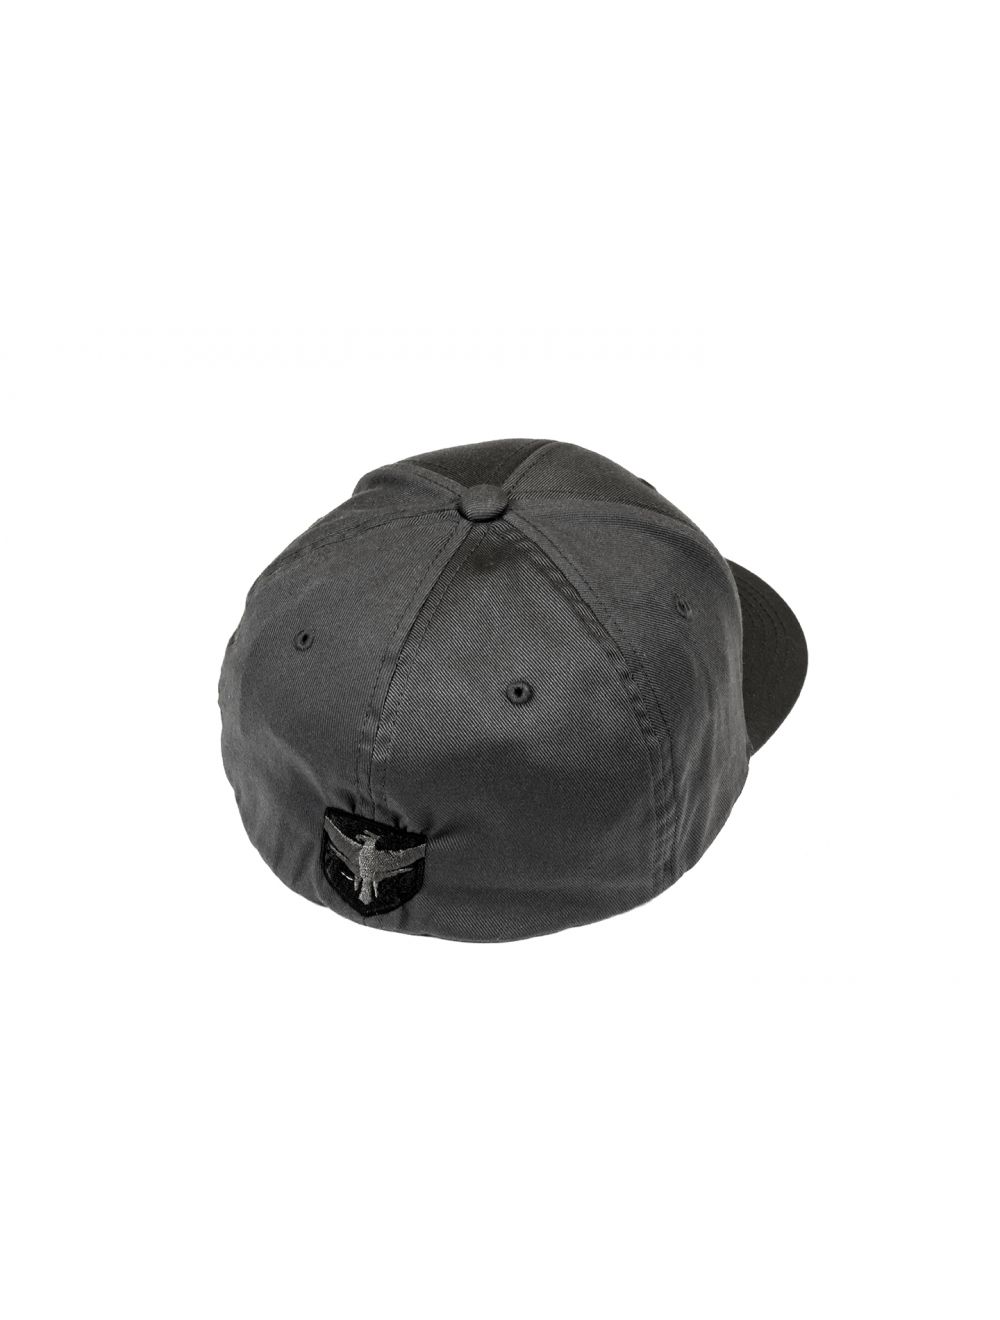 - Falcon TeraFlex (L/XL) Flexfit Hat Visor Shocks | Gray/Black Dark Curved